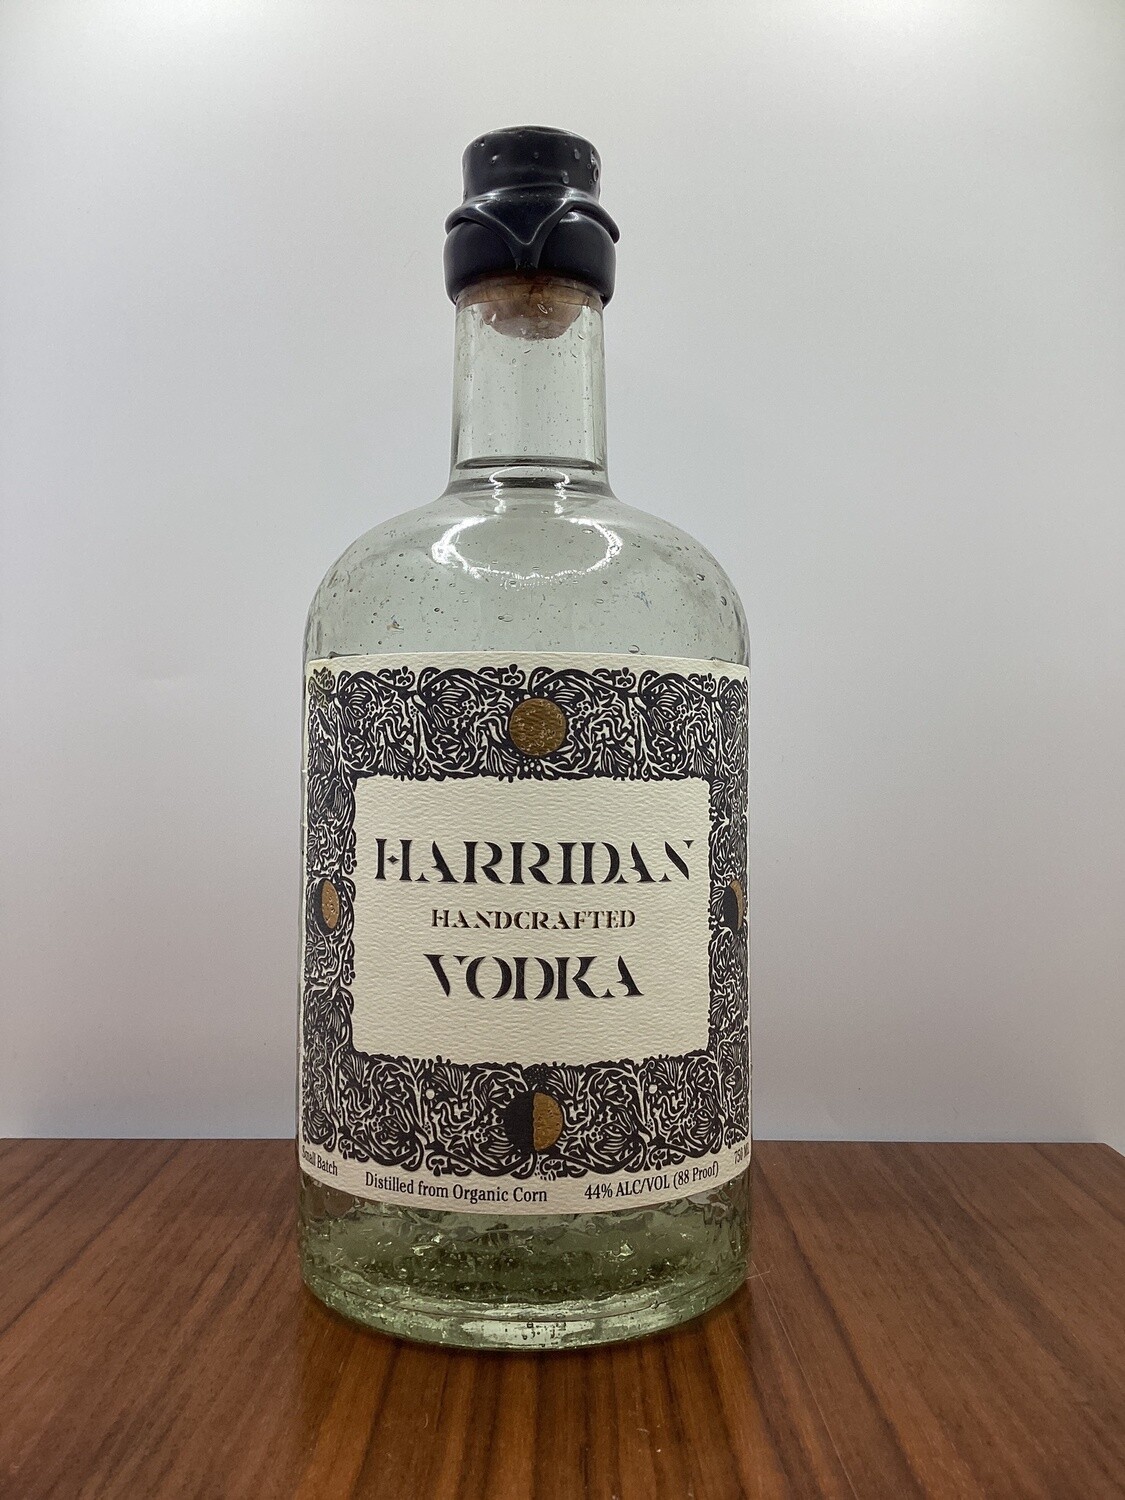 Harridan Vodka